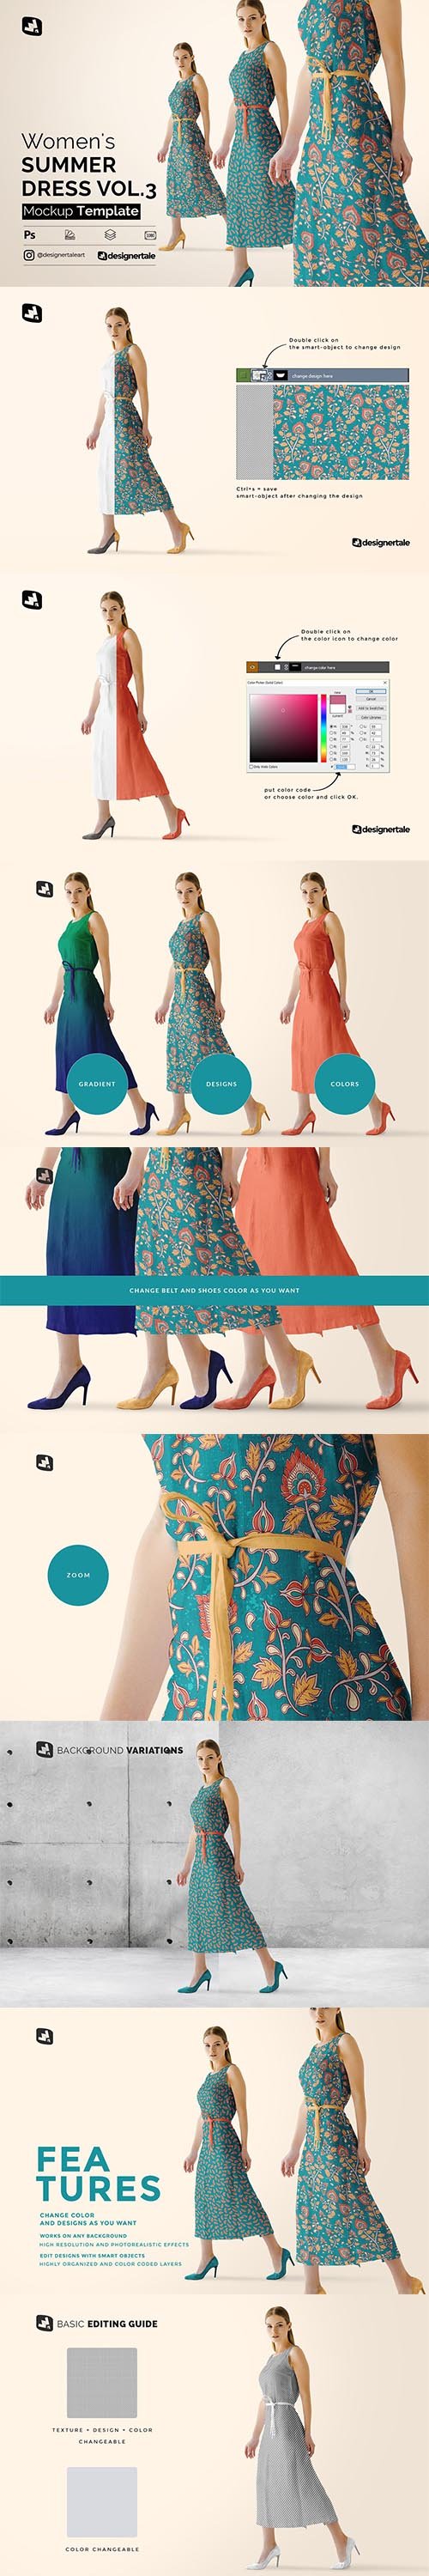 CreativeMarket - Women's Summer Dress Mockup Vol.3 - 4905778